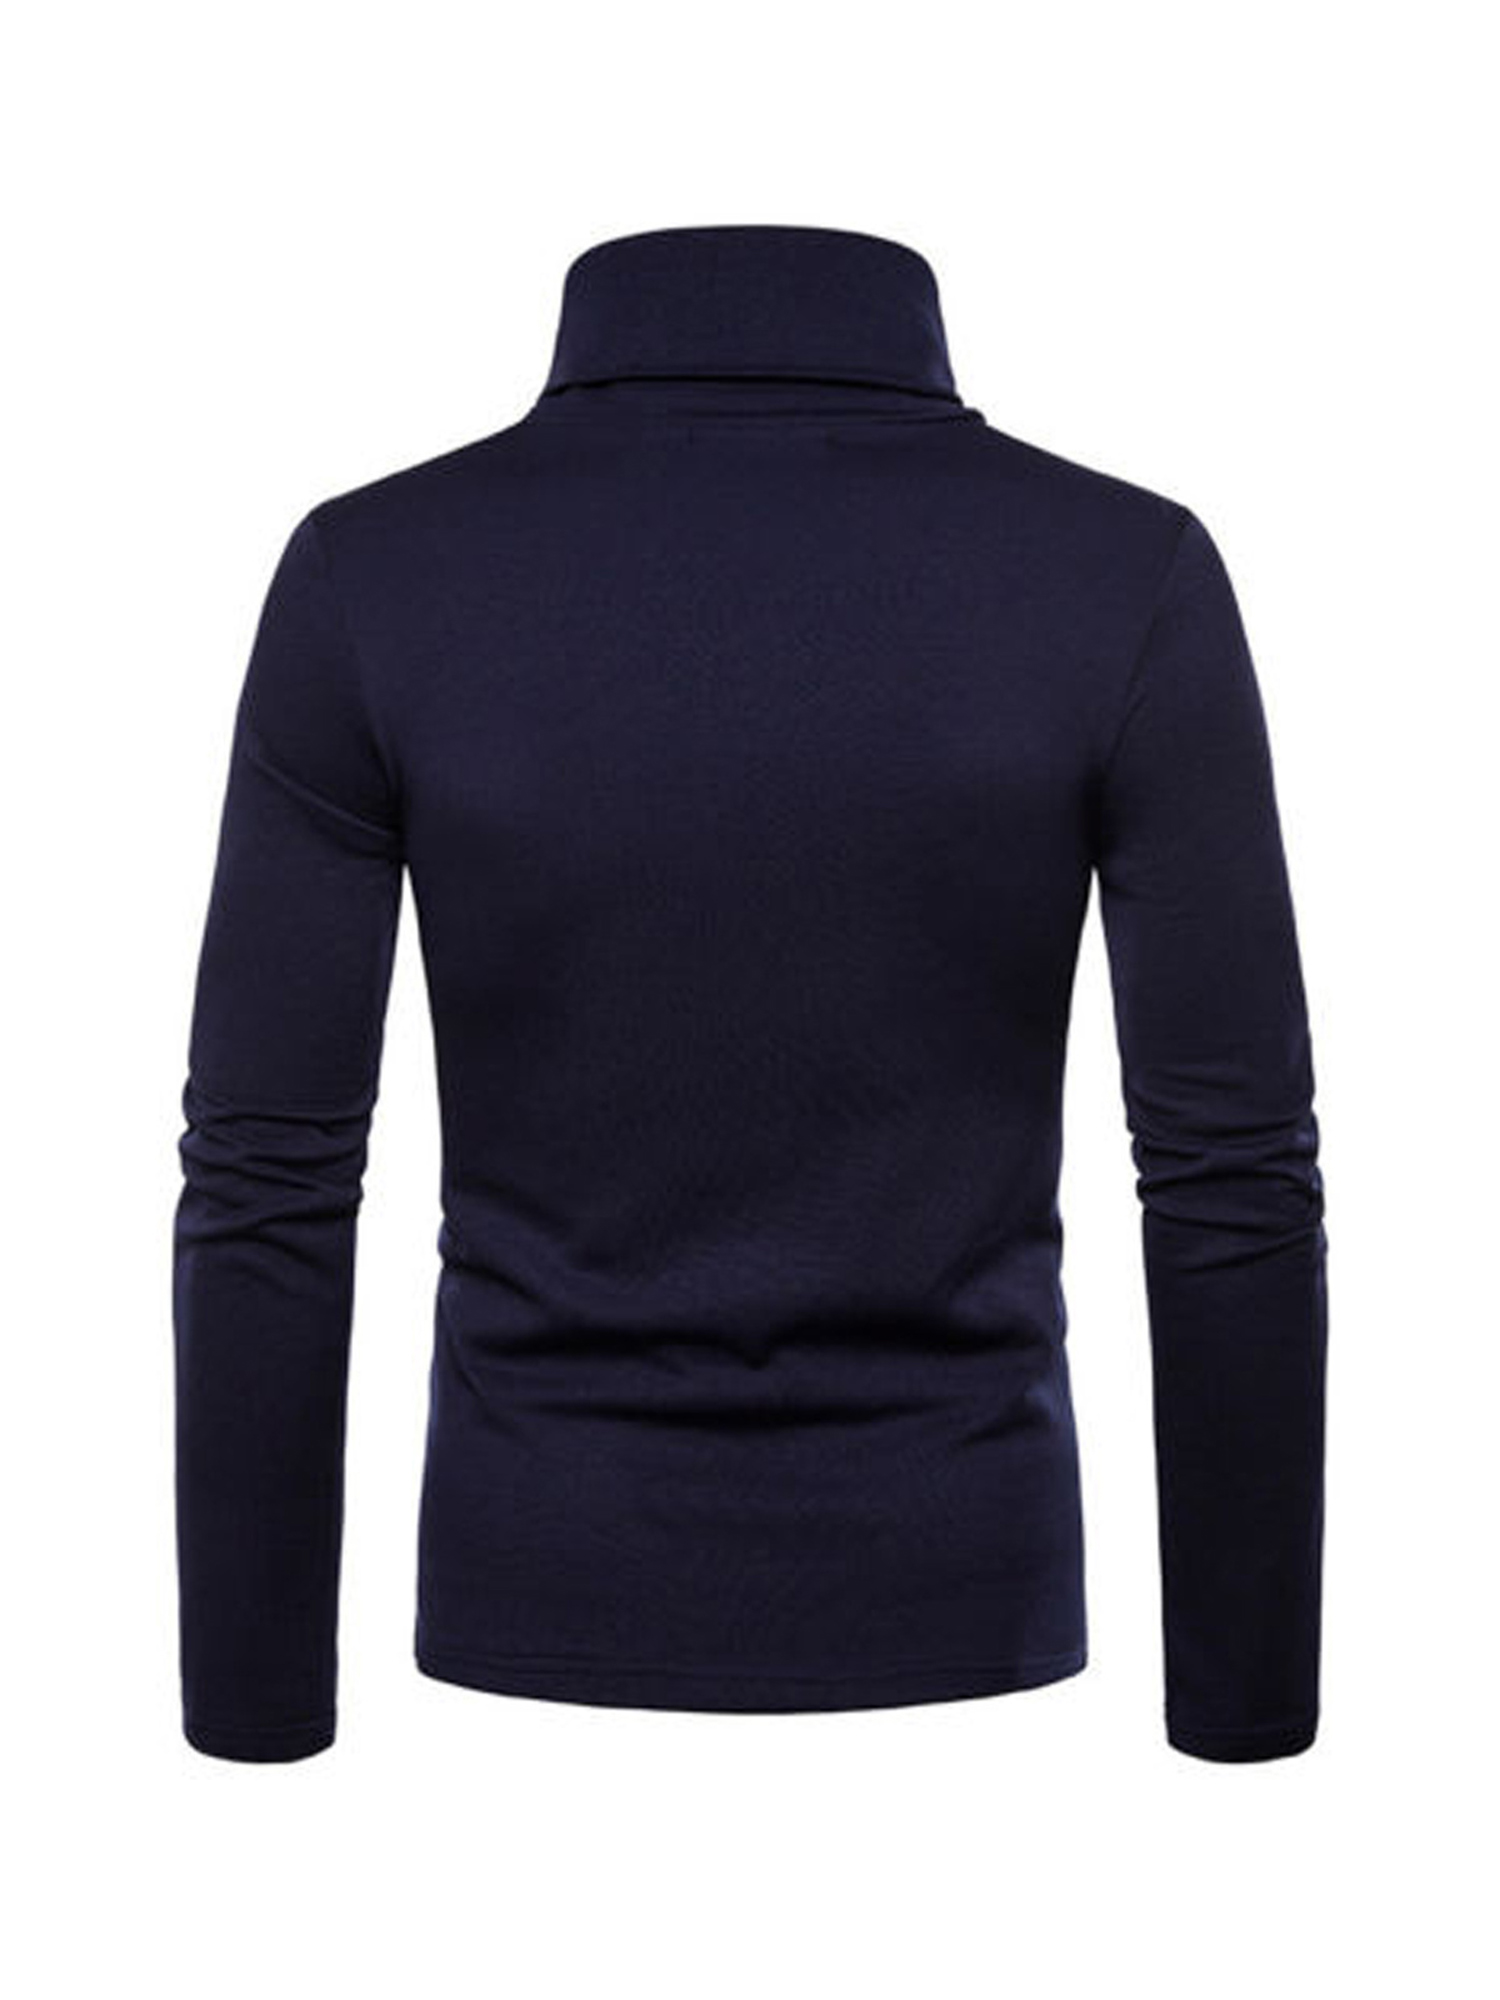 Sunisery Mens Turtleneck Pullover Knitted Jumper Tops Stretch Slim Basic Sweater Shirt - image 4 of 6